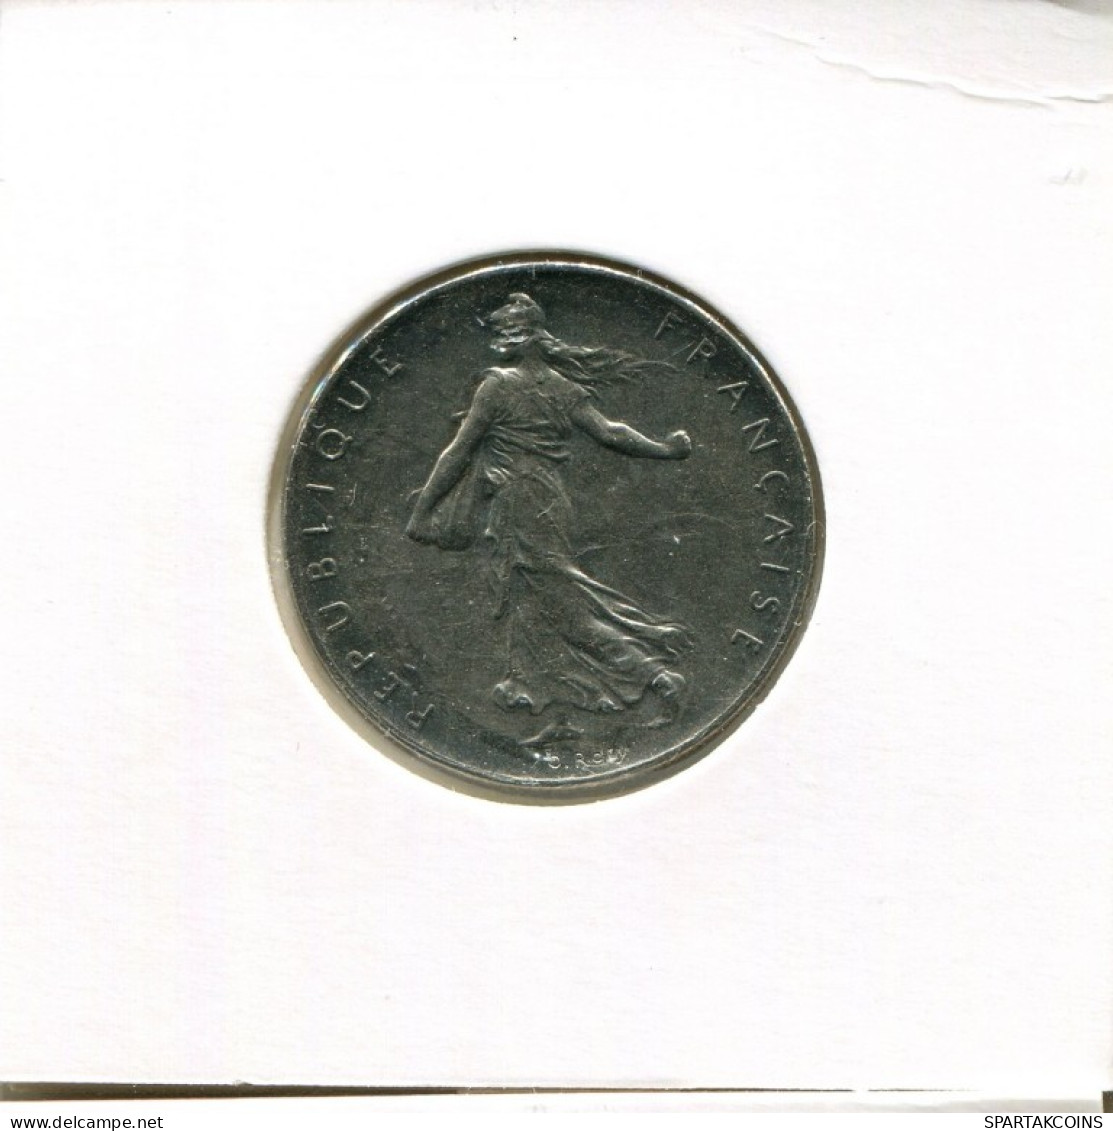 1 FRANC 1976 FRANKREICH FRANCE Französisch Münze #AK538.D.A - 1 Franc